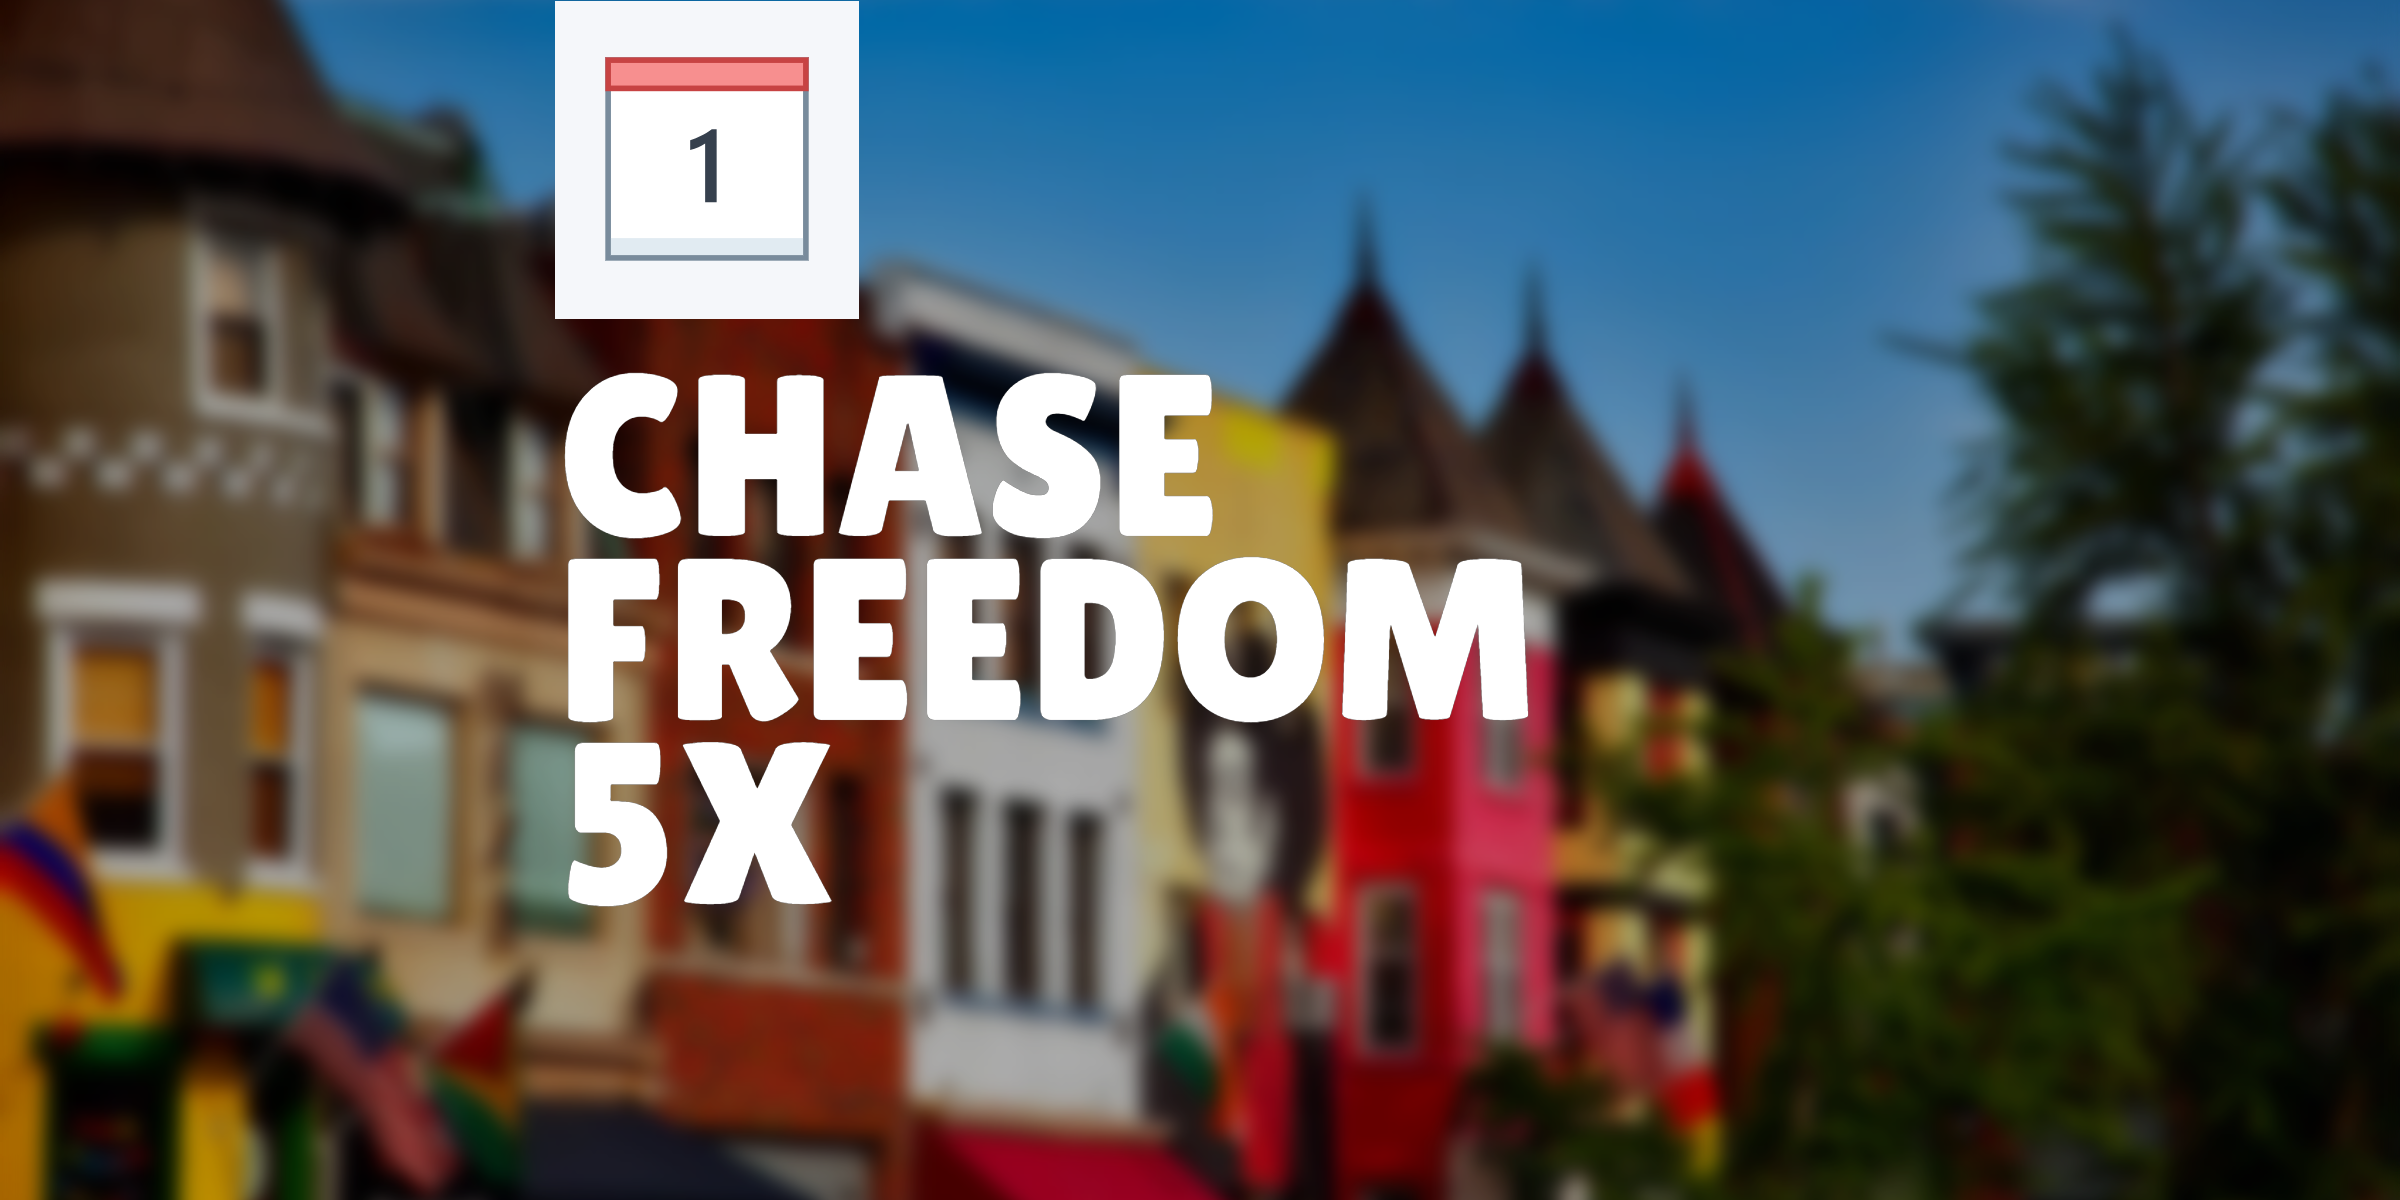 Chase Freedom Q3 2020 Bonus Categories